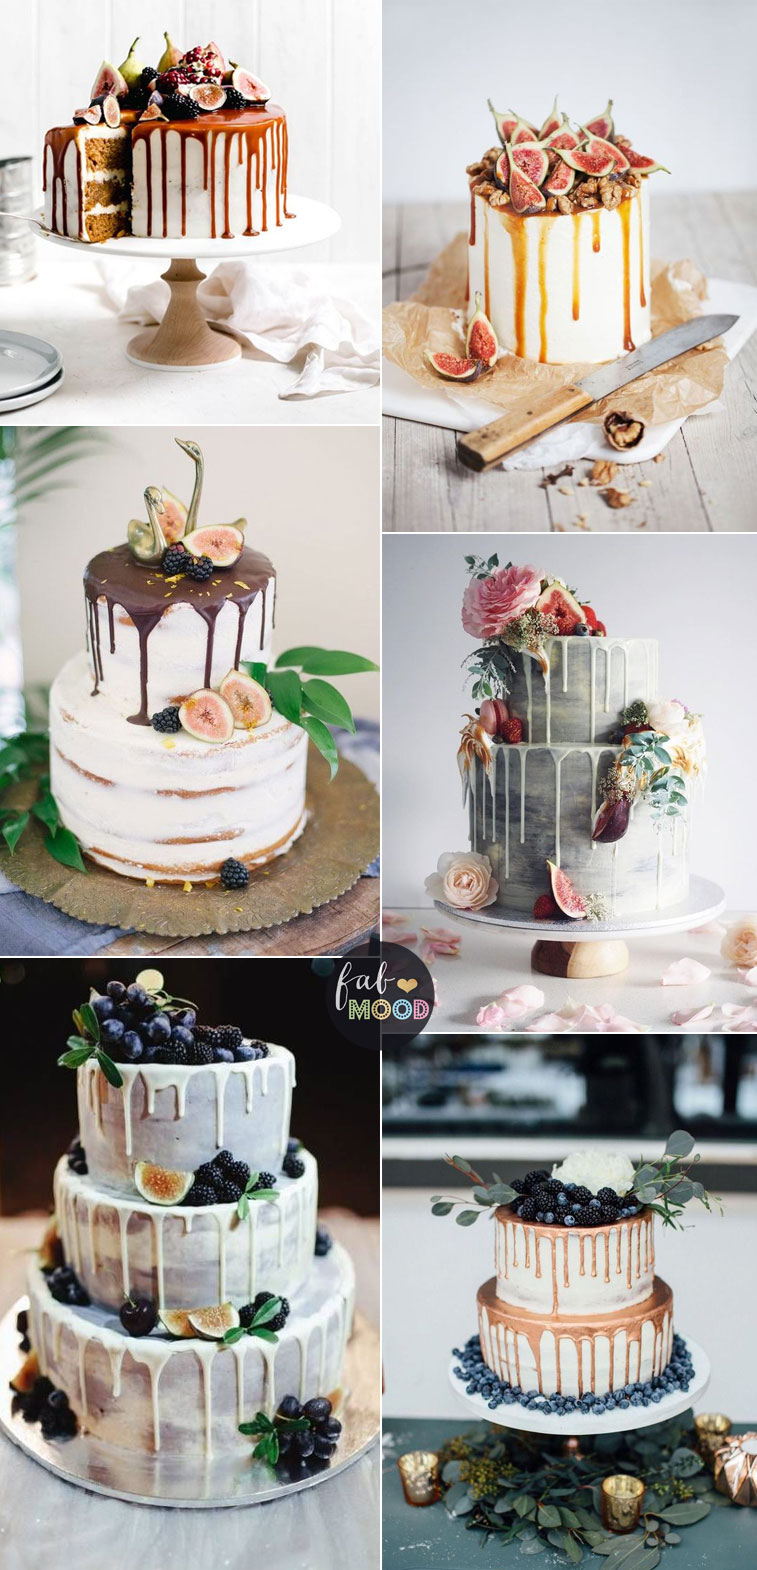 Beautiful autumn wedding cake - drip wedding cake topped with berries ( fruits in season ) #fallwedding #wedding #cake #autumn